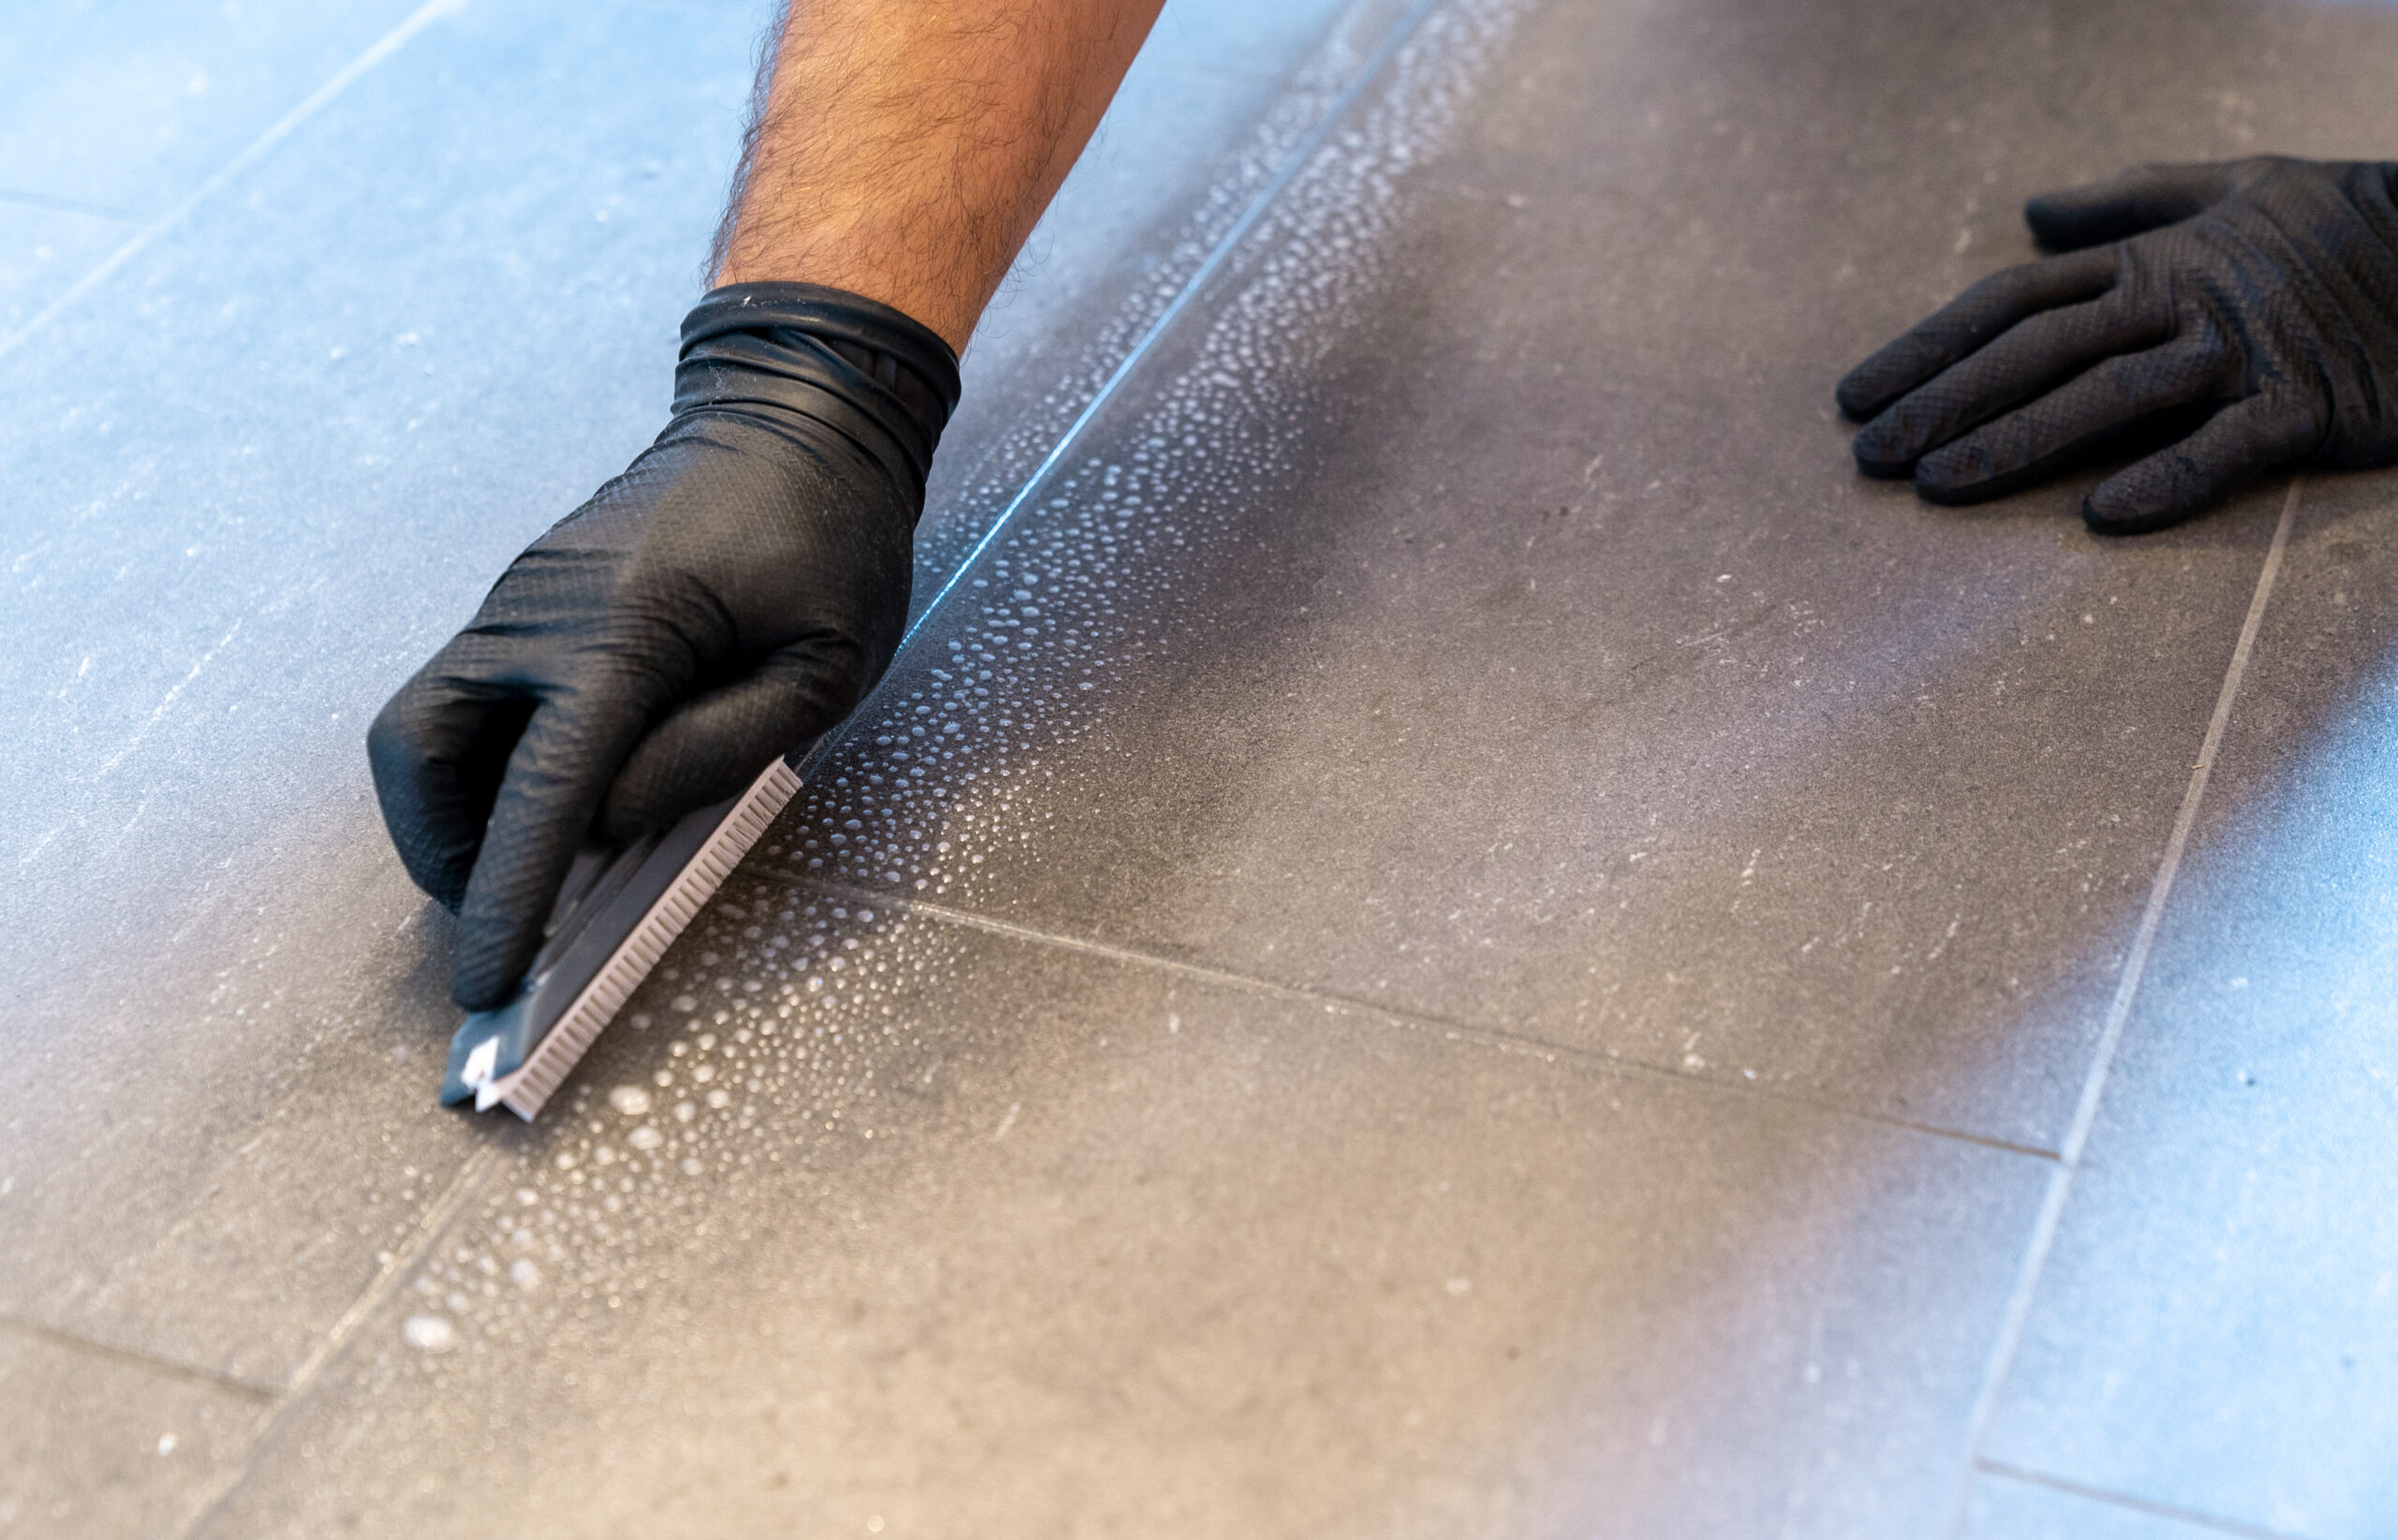 How To Clean Oil Off Tile Floor